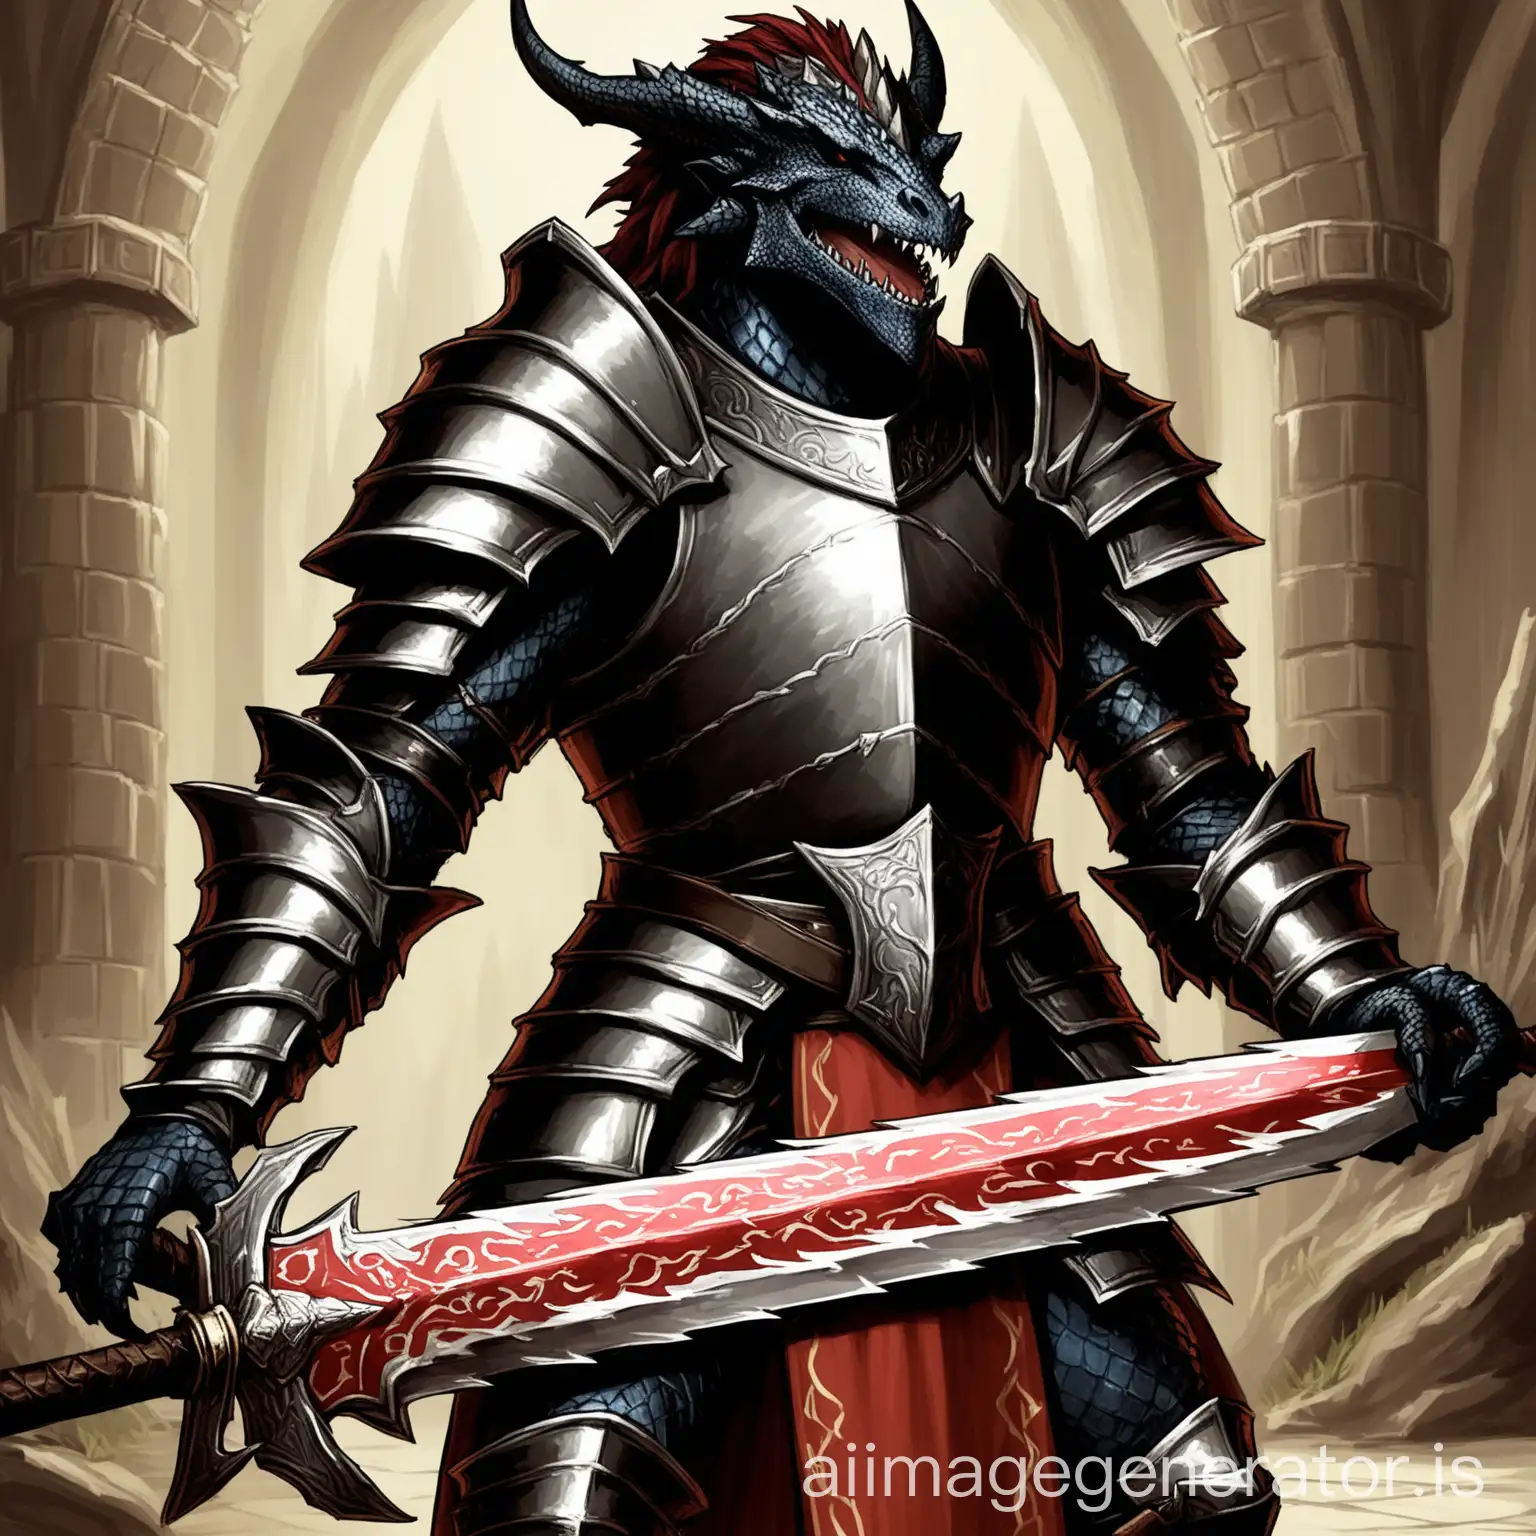 Happy-Dragonborn-Warrior-in-Armor-with-Great-Sword